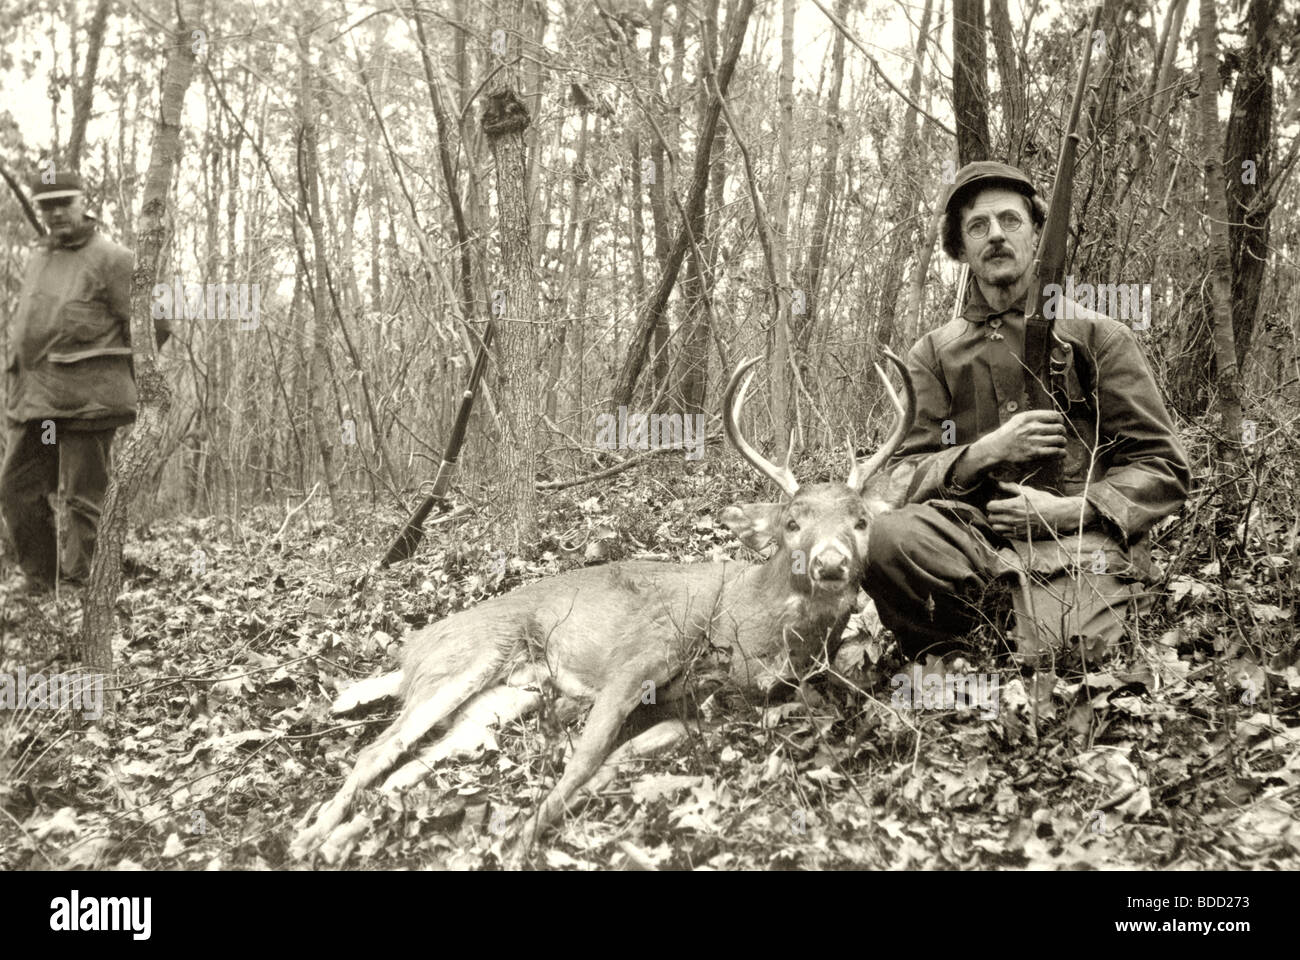 Hunters Posing with Deer Stock Photo